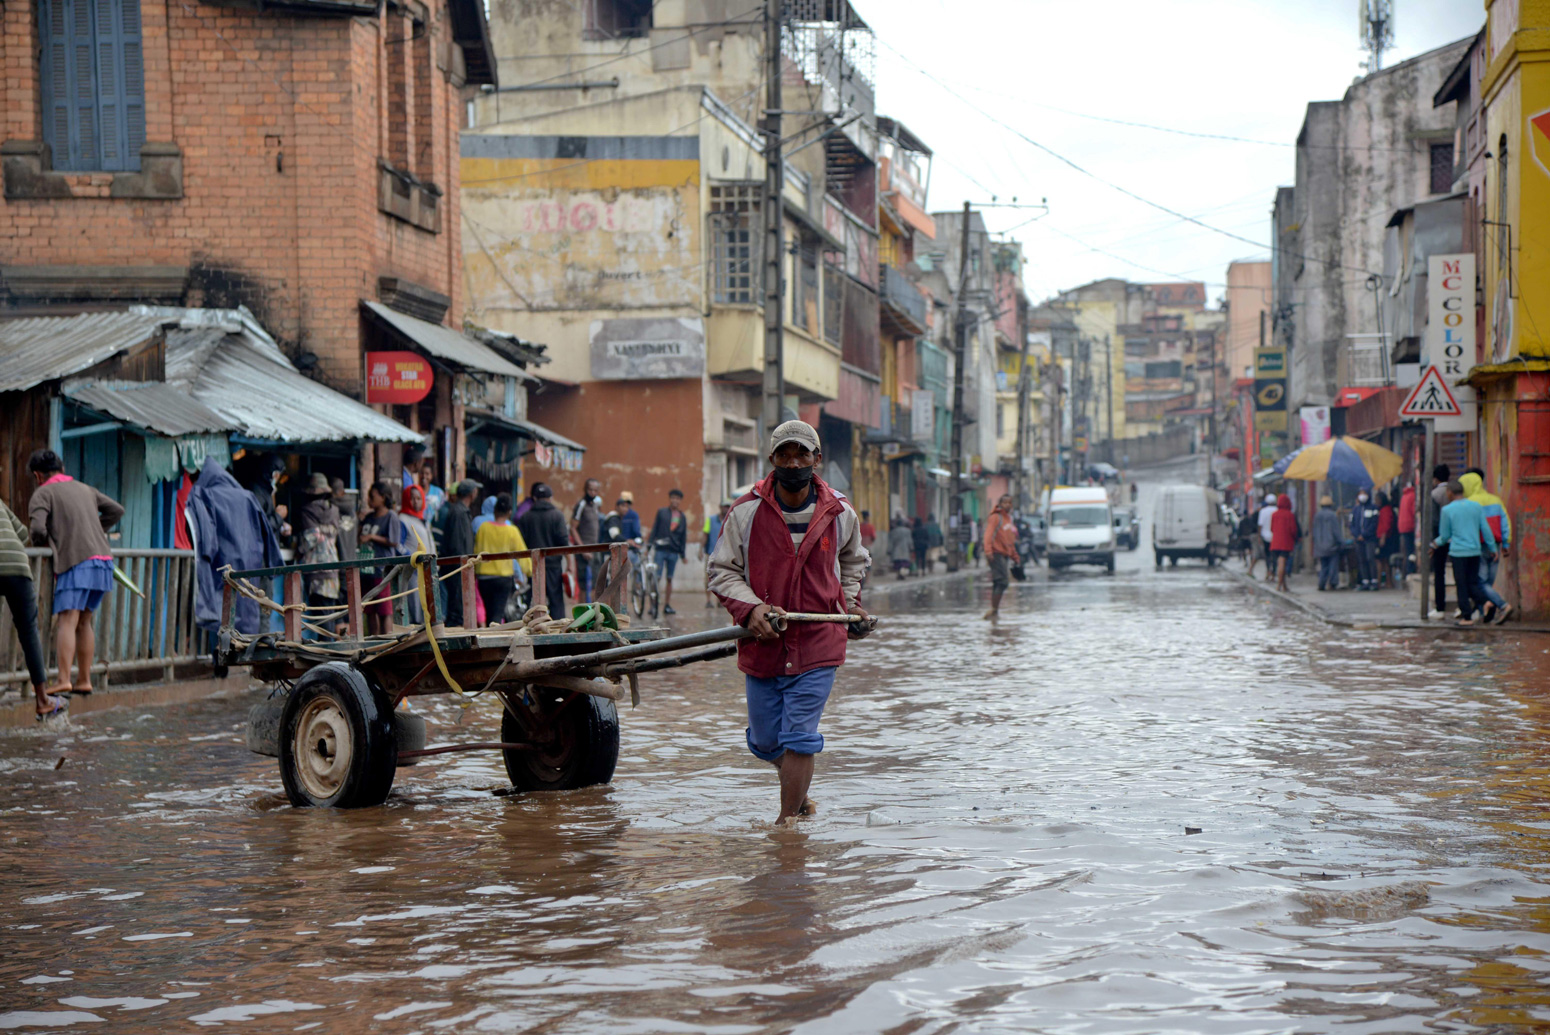 A man wades through a flooded road in Madagascar, after tropical cyclone Batsirai, Feb 2022